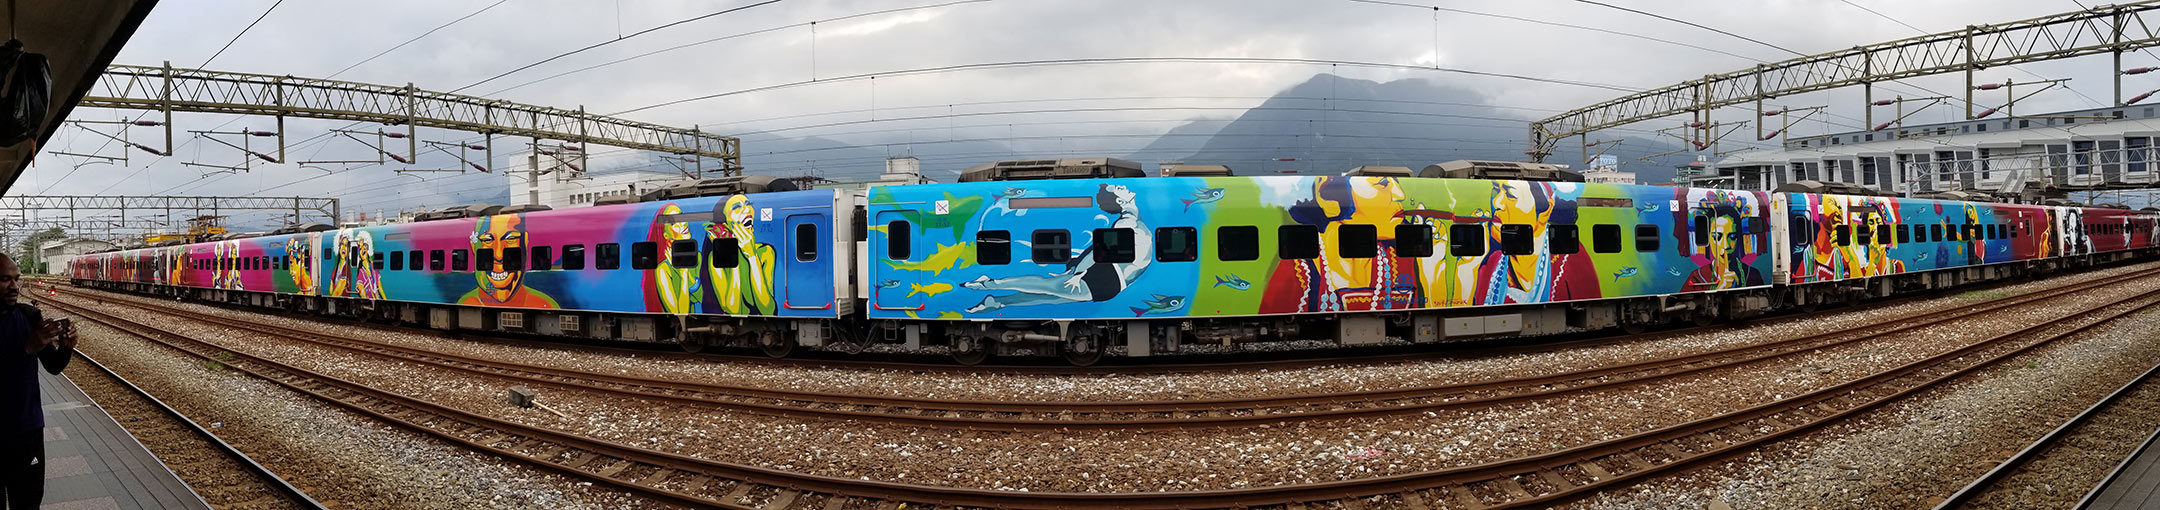 fisheye view of painted train cars